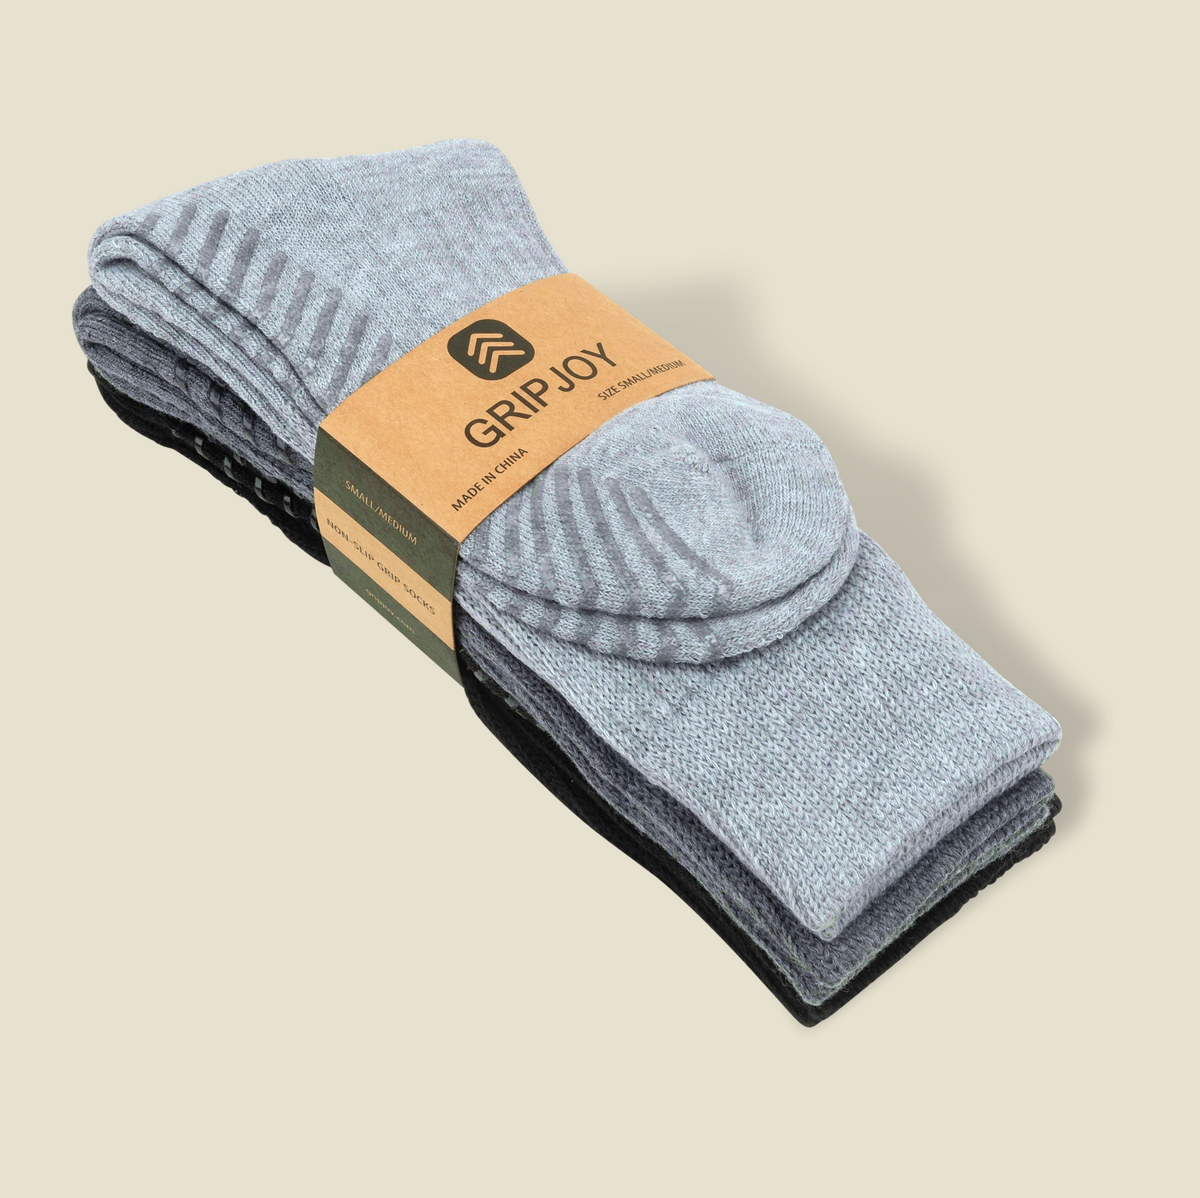 Grip Socks for Men - Casual Comfort Crew x3 Pairs - Gripjoy Socks